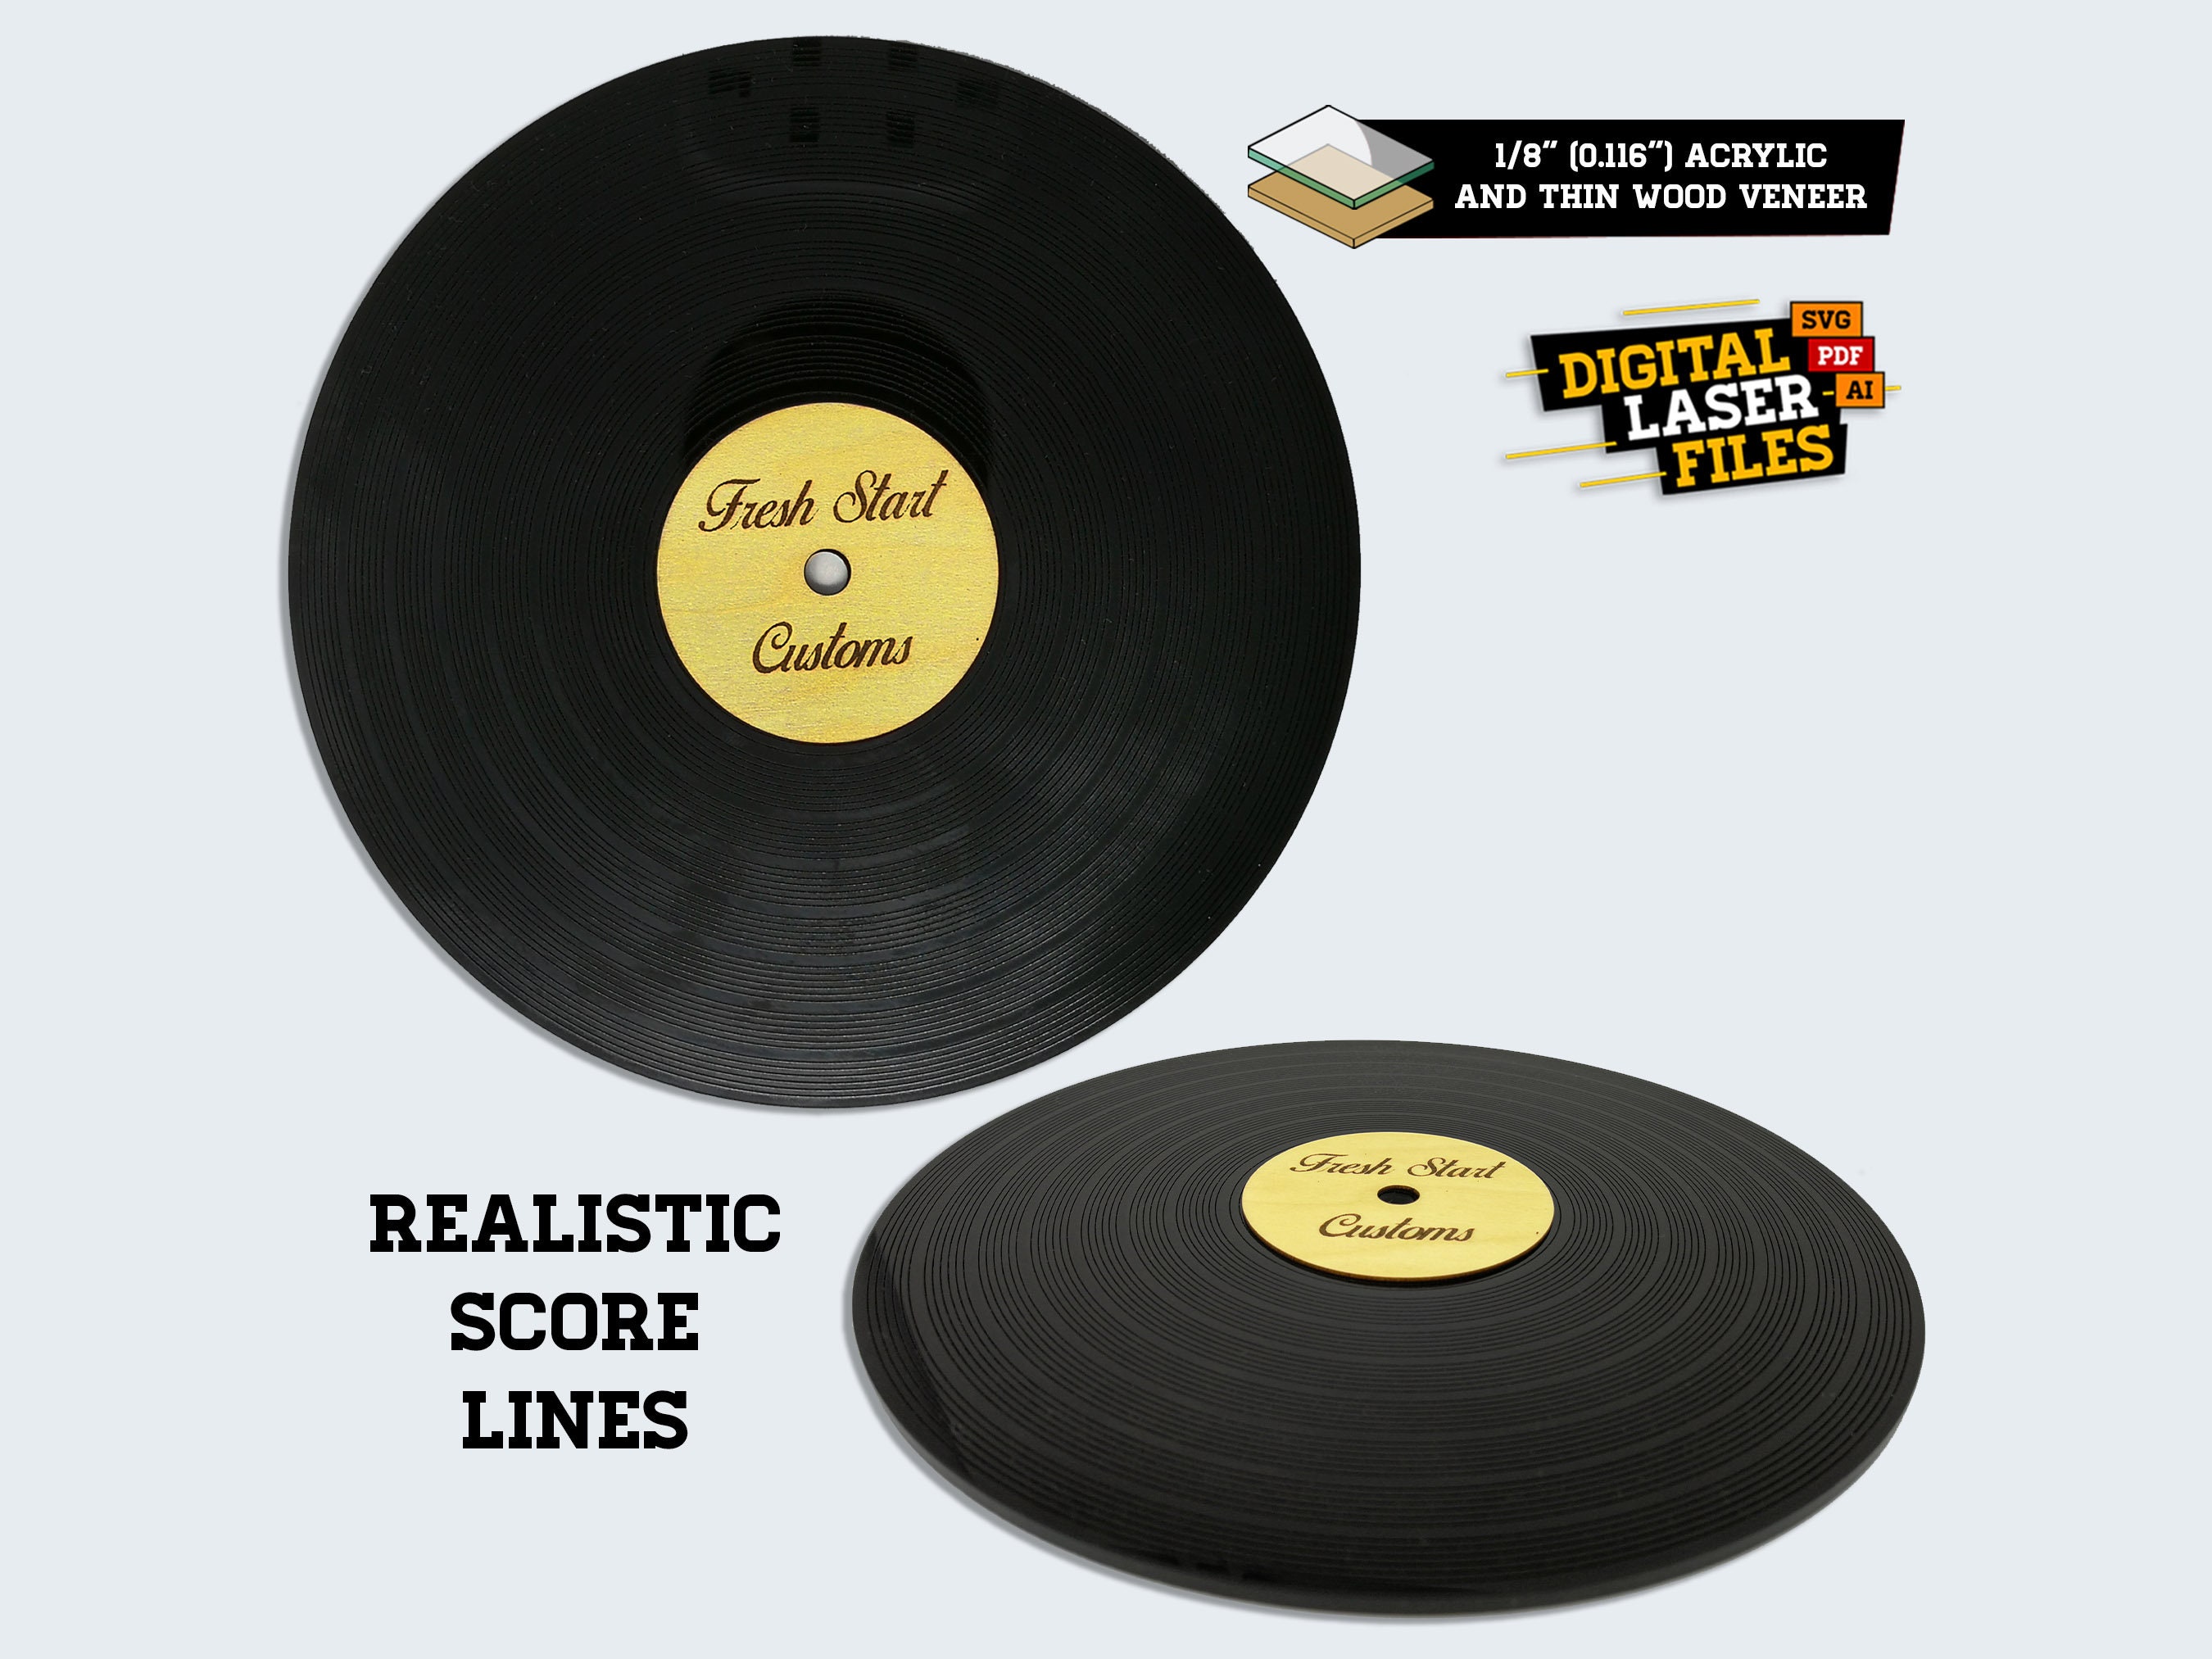 Editable Oracal 651 Vinyl Color Chart, Canva Template for Cricut silhouette  Business, Downloadable, Printable